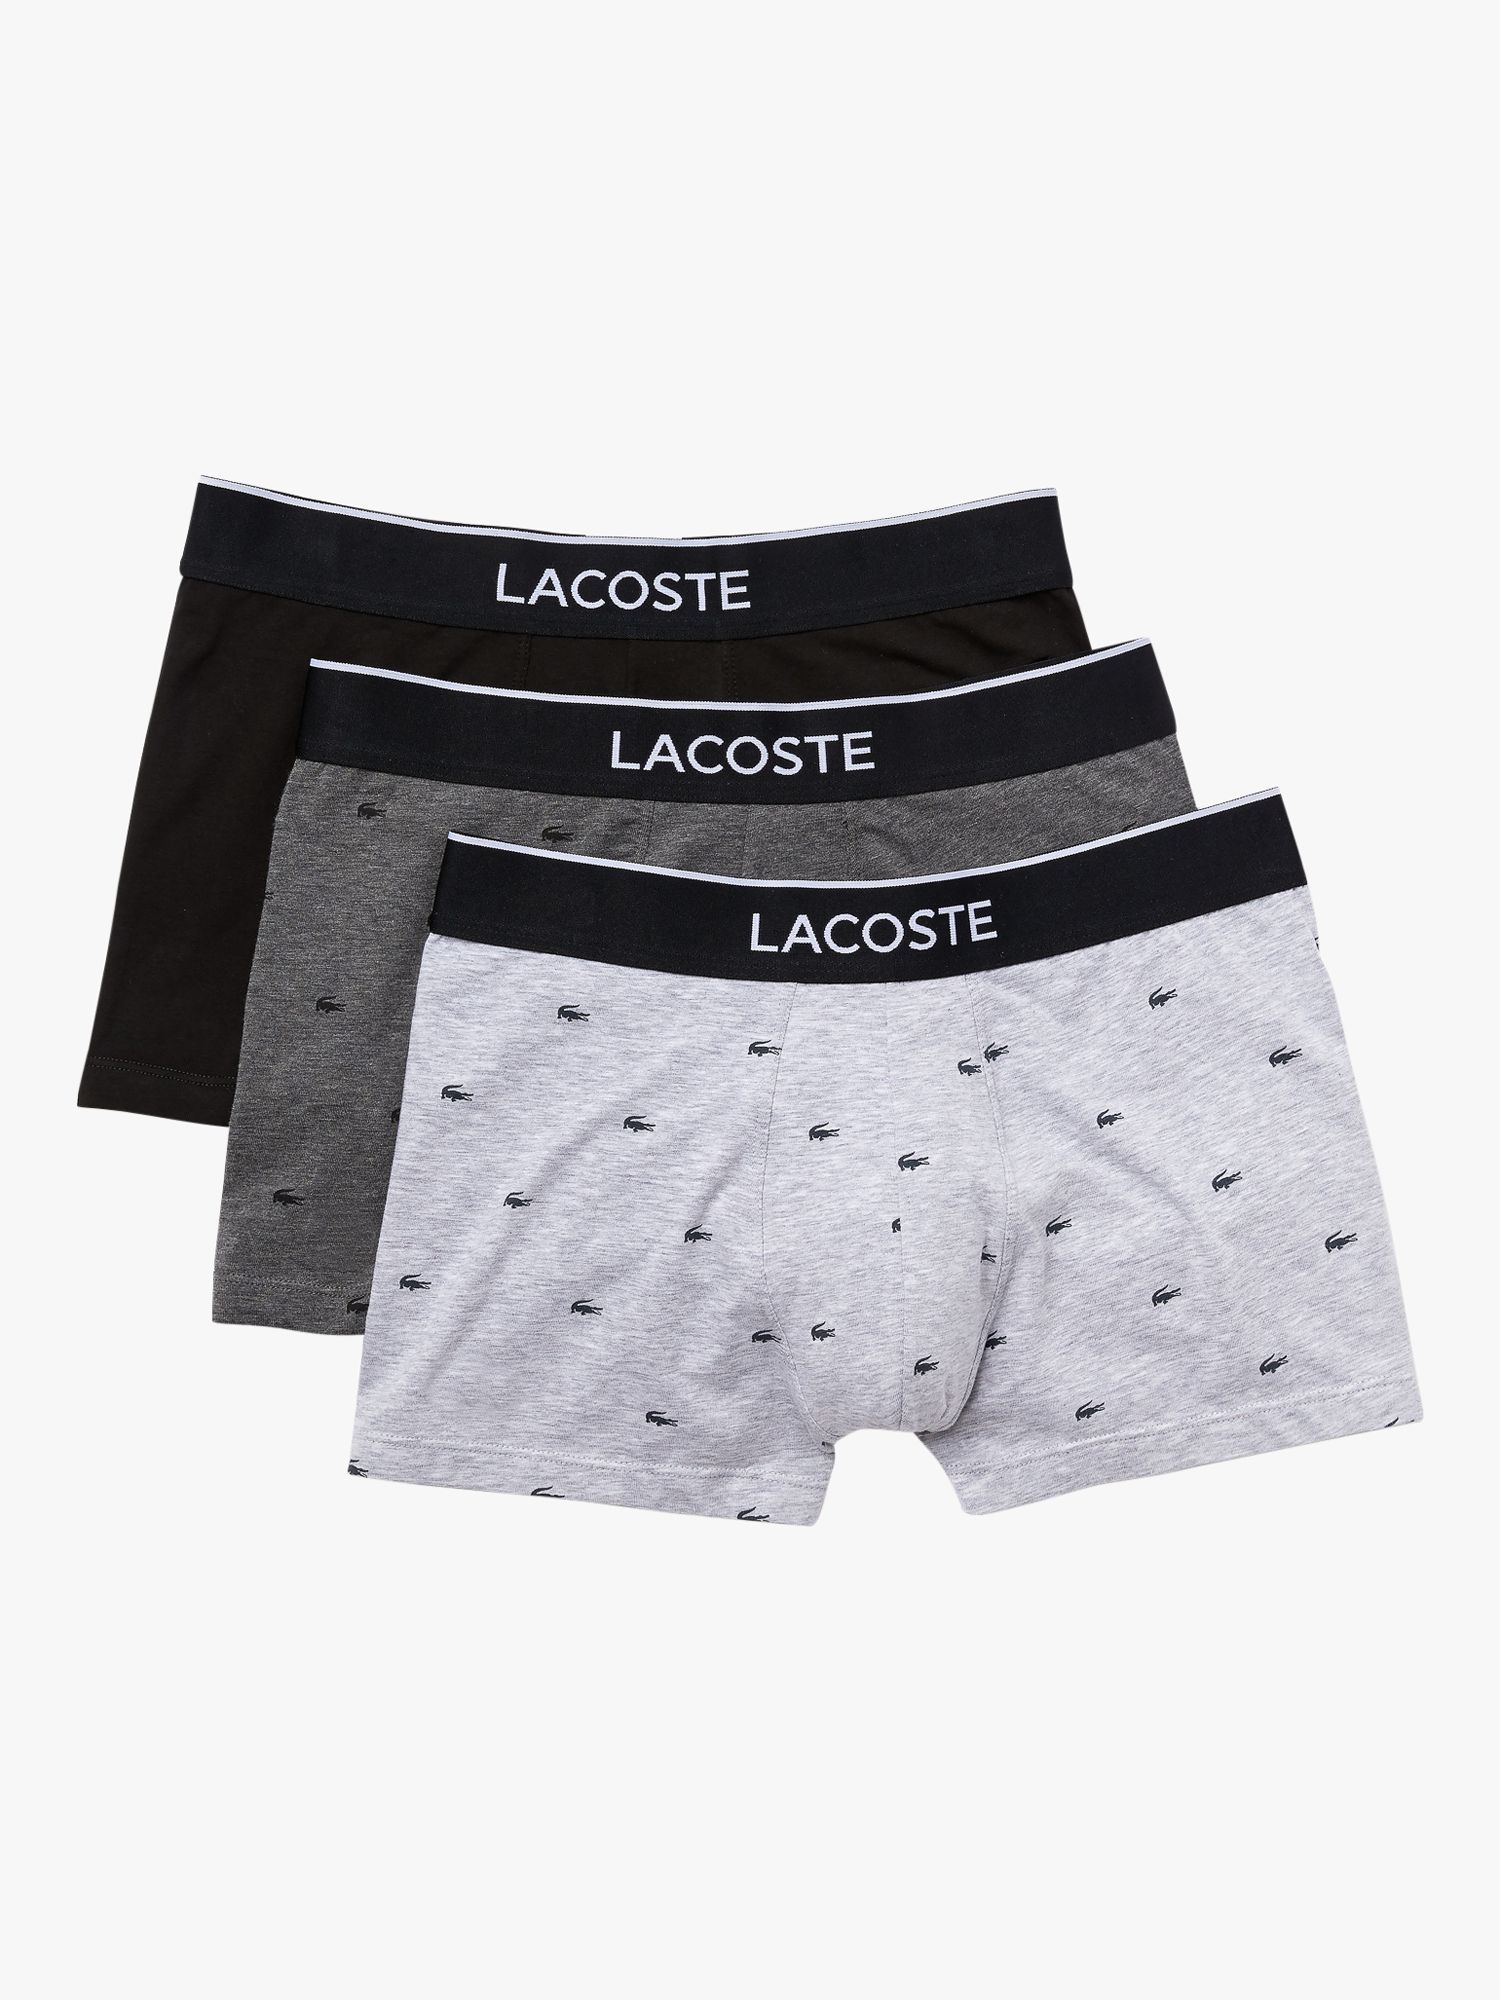 Lacoste Twin Pack Trunks White, Men's, Pants, Underwear, Boxers